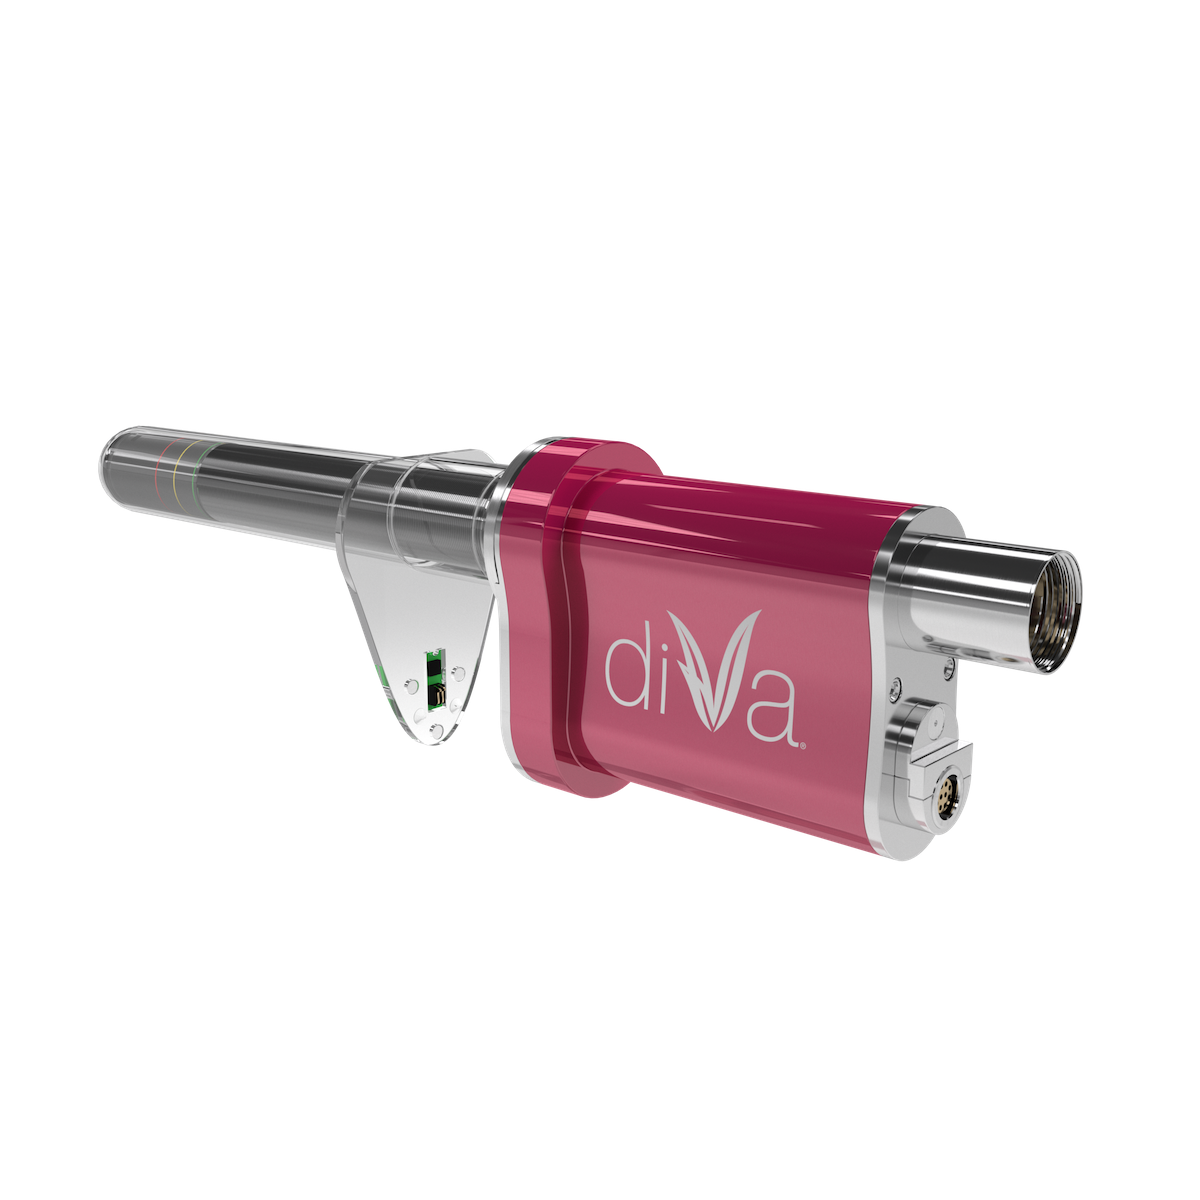 diVa device close up